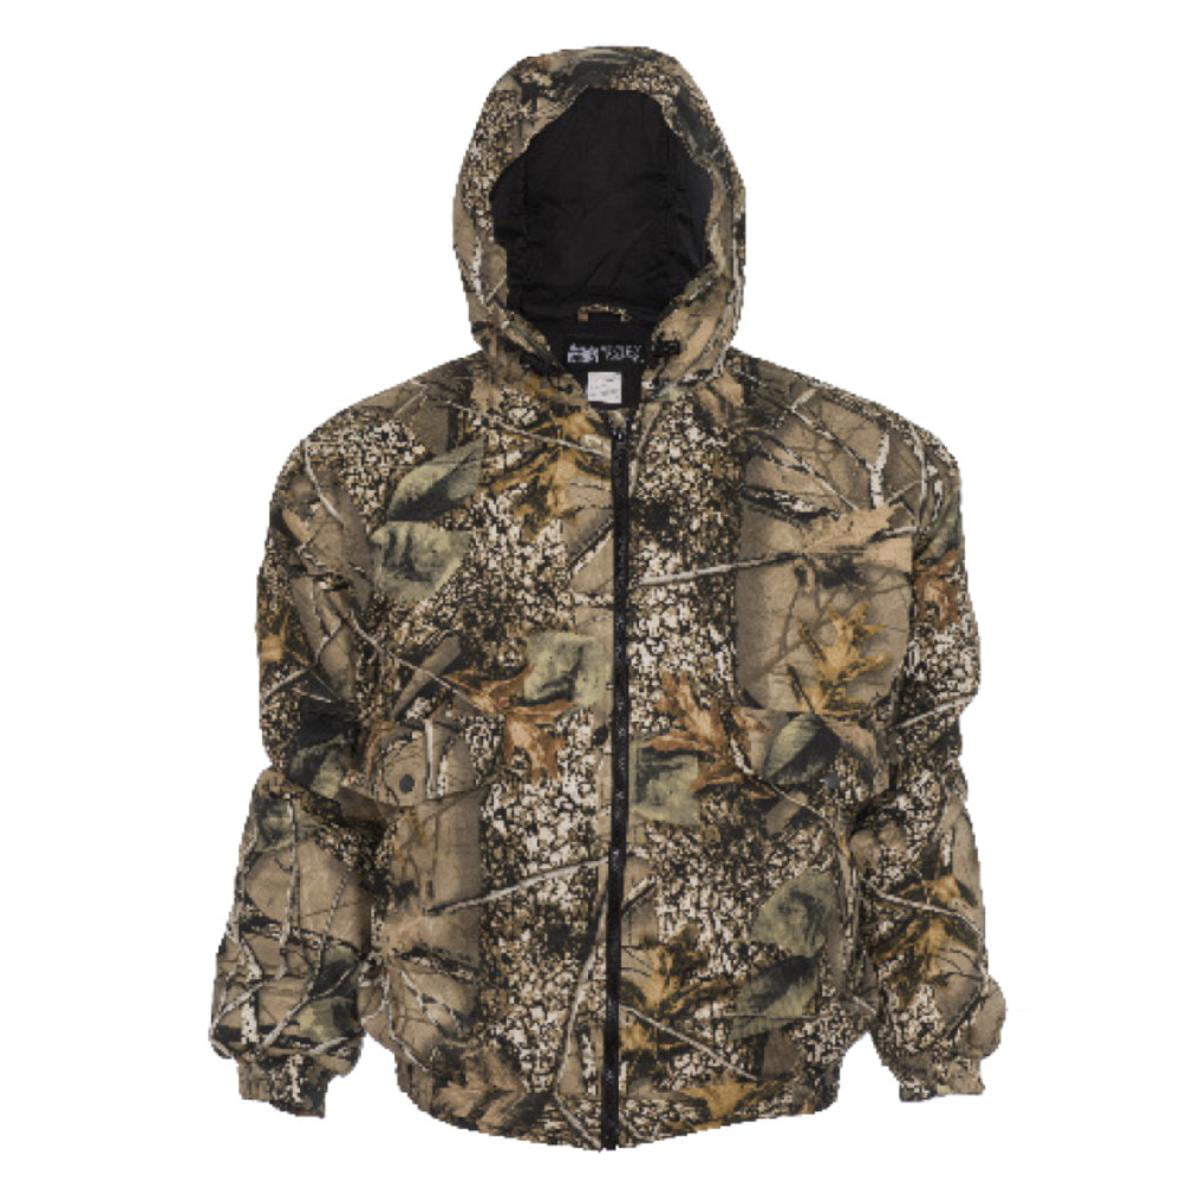 Insulated Hooded Hunting Jacket, Burly Camo Tan, L - Walmart.com